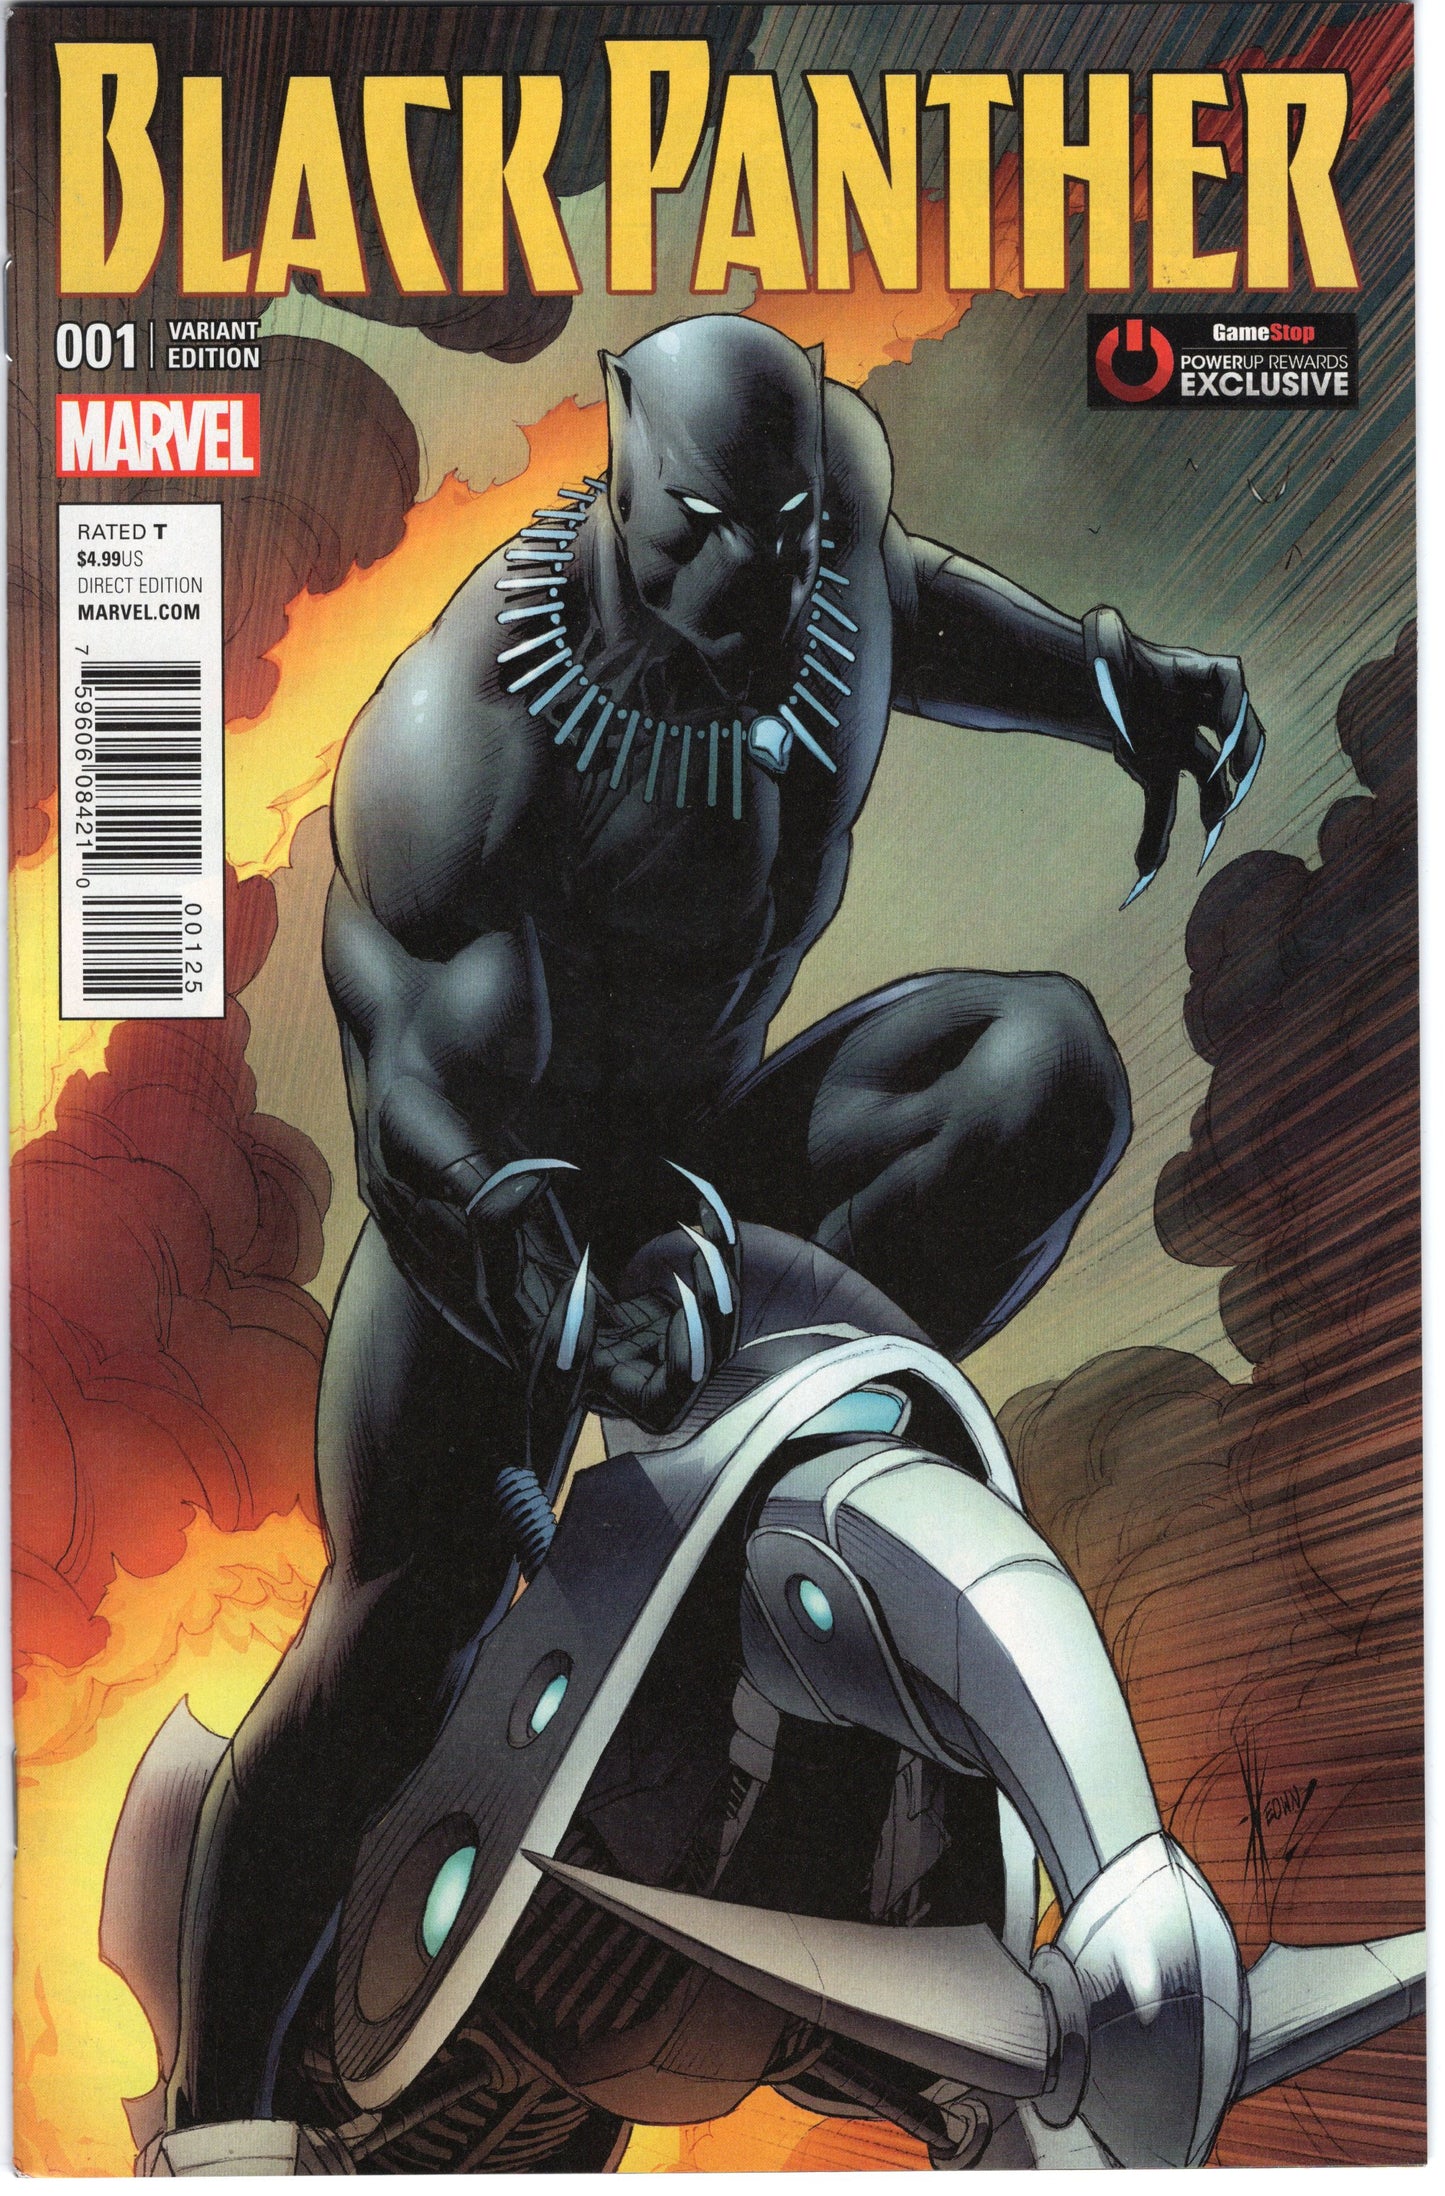 Black Panther - Issue #1 "Gamestop Exclusive" (June, 2016 - Marvel Comics) NM-